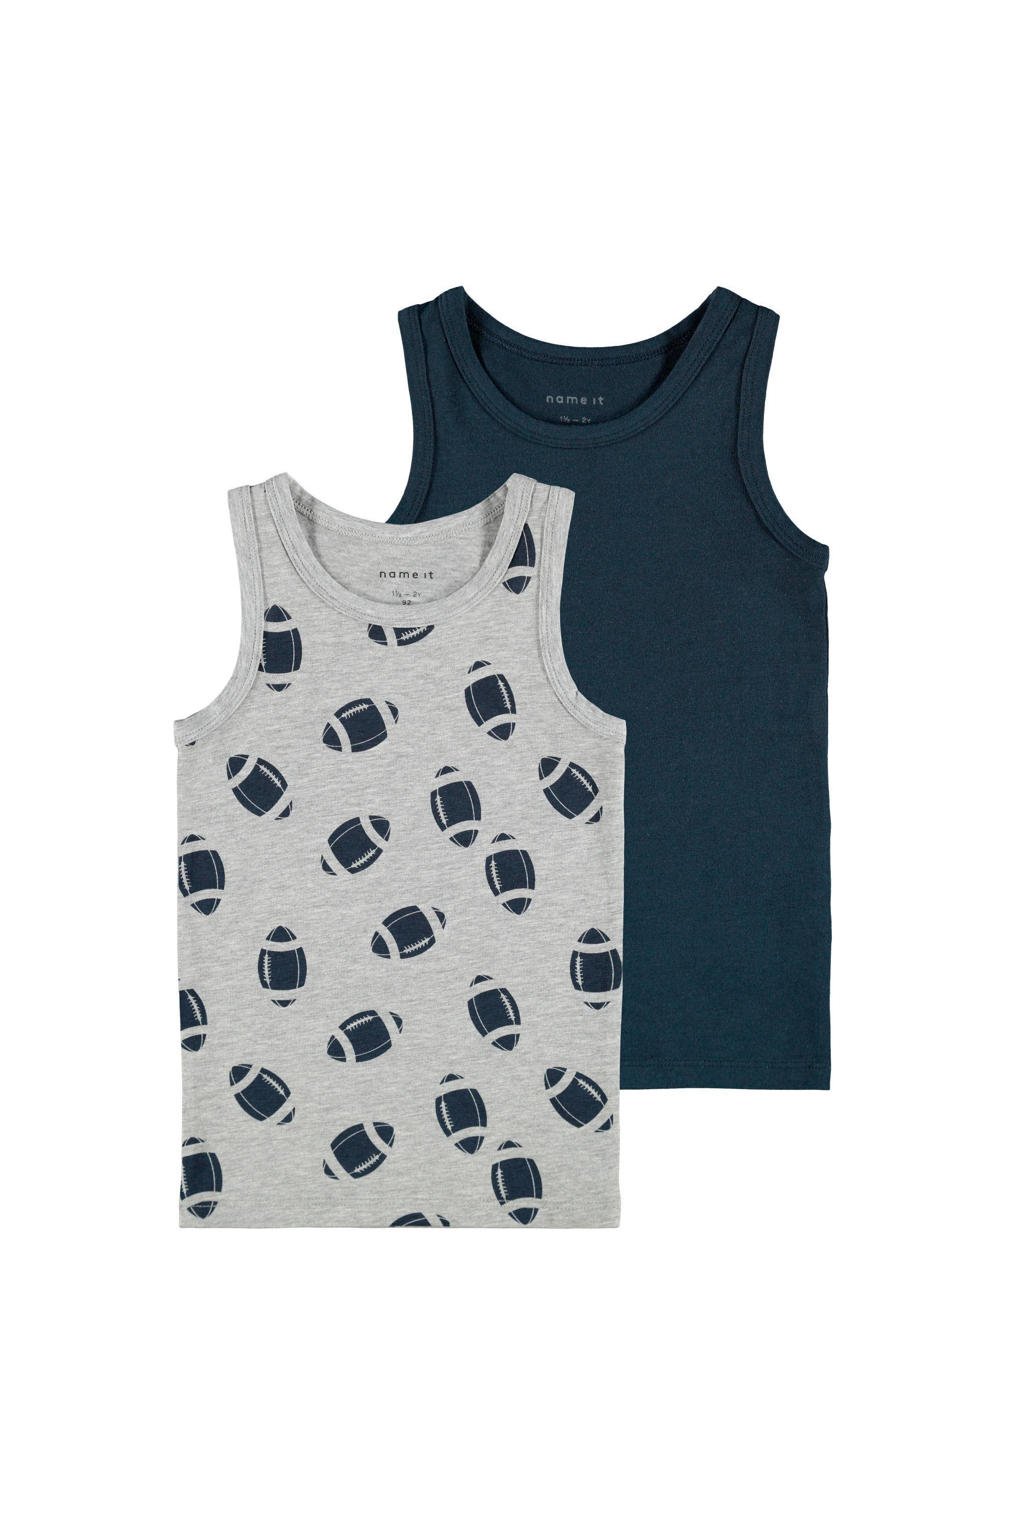 NAME IT MINI hemd - set van 2 grijs melange/donkerblauw